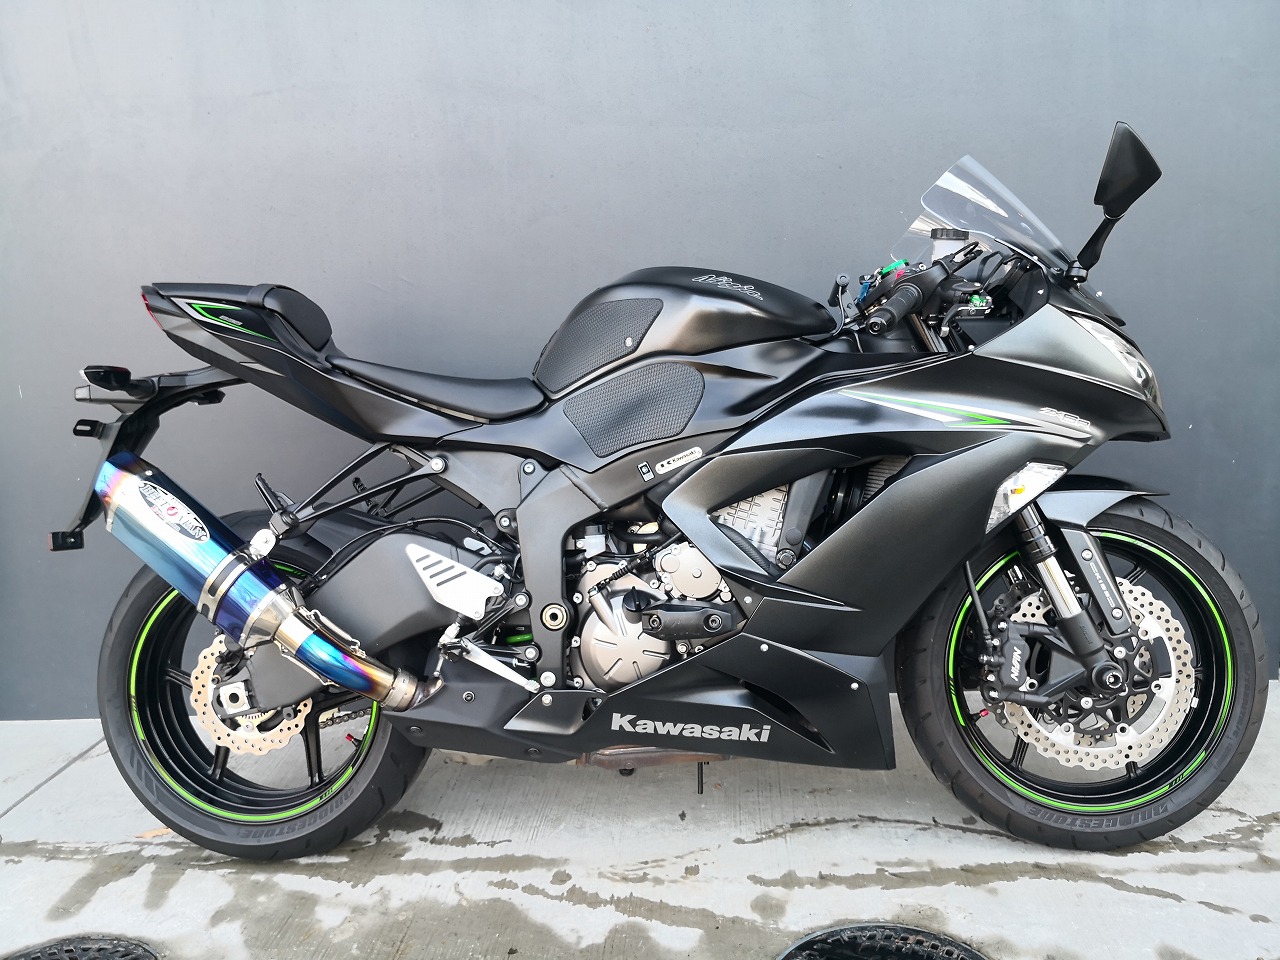 Kawasaki NINJA ZX-6R KRTエディション 2016年式 逆車 - オートバイ車体